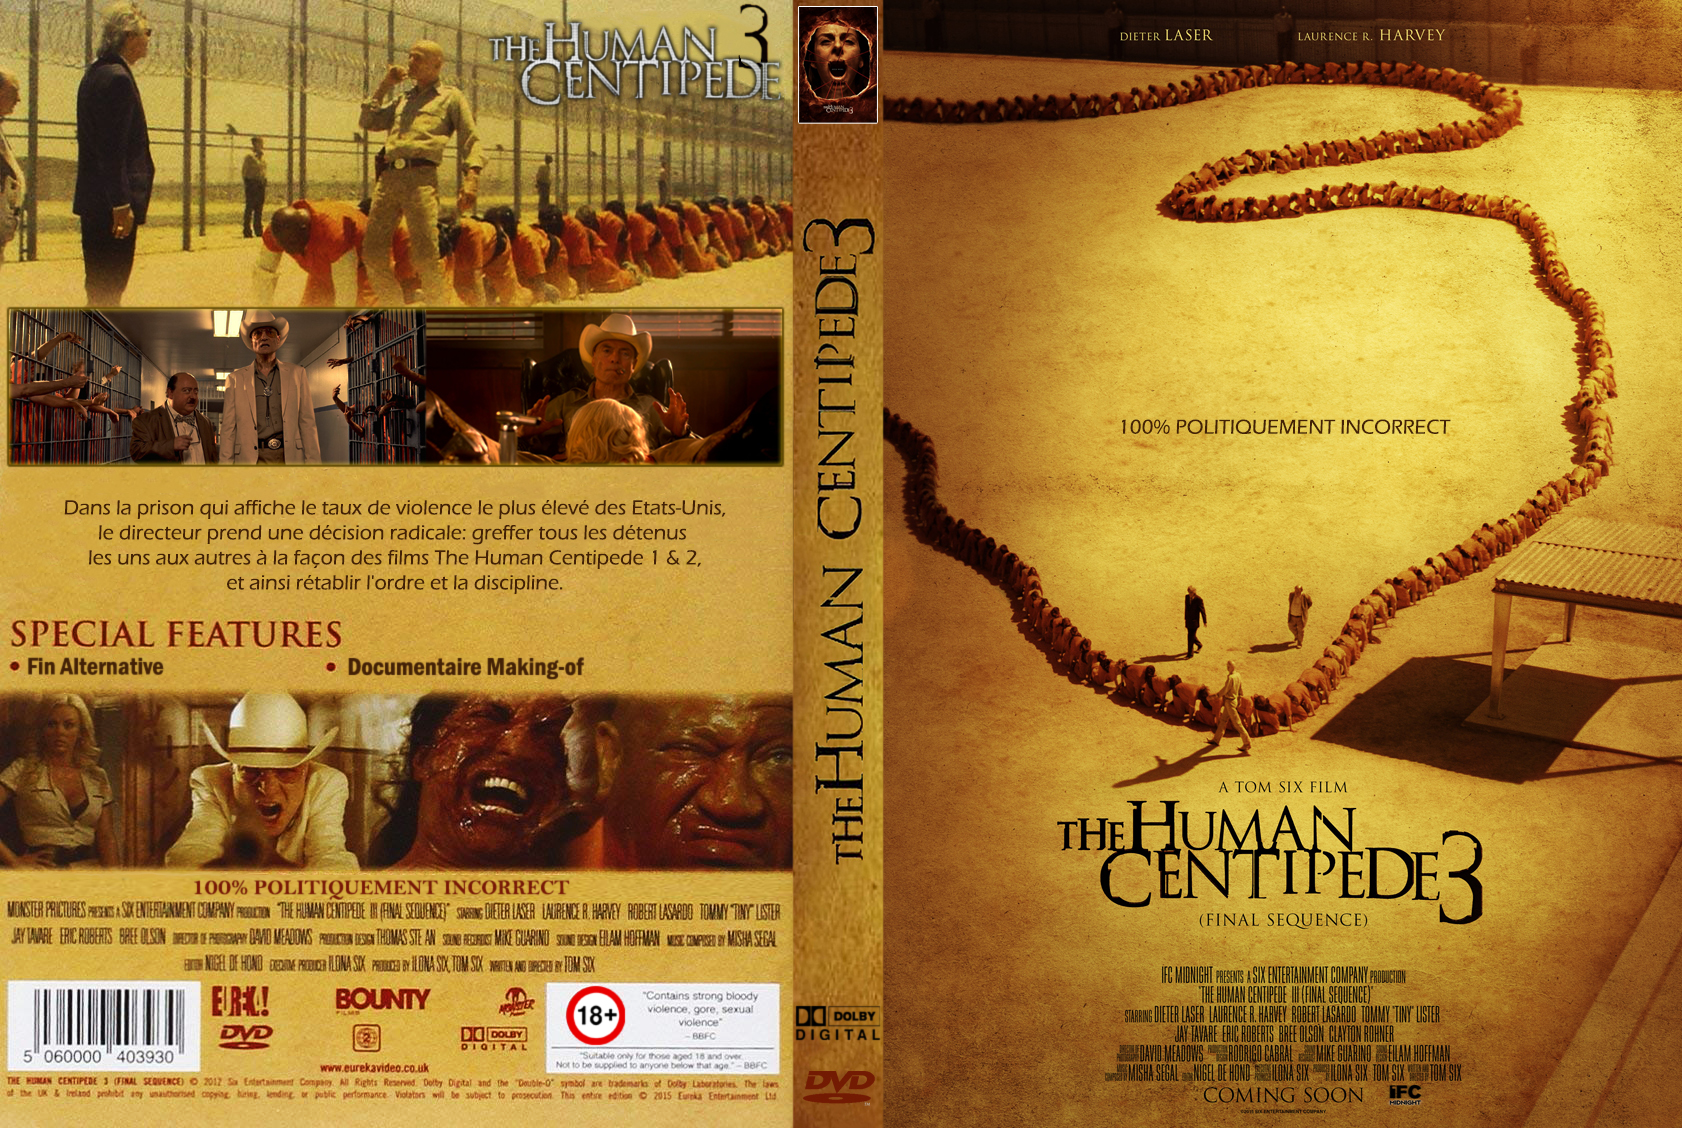 Jaquette DVD The Human Centipede 3 custom